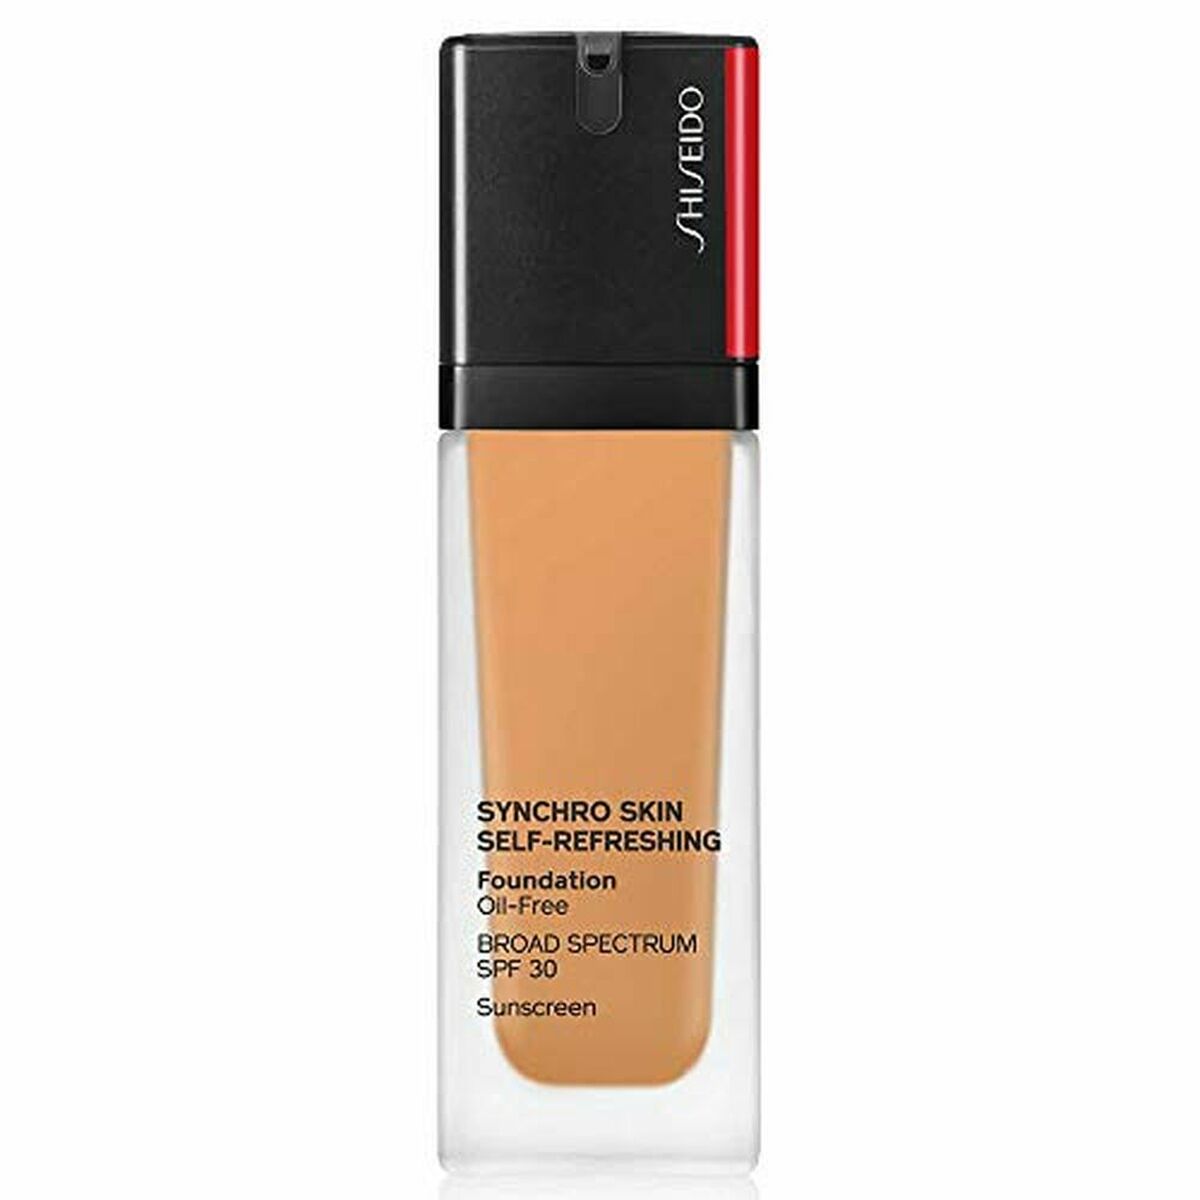 Fluid Makeup Basis Shiseido Synchro Skin Self-Refreshing Nº 410 Sunstone 30 ml - CA International 